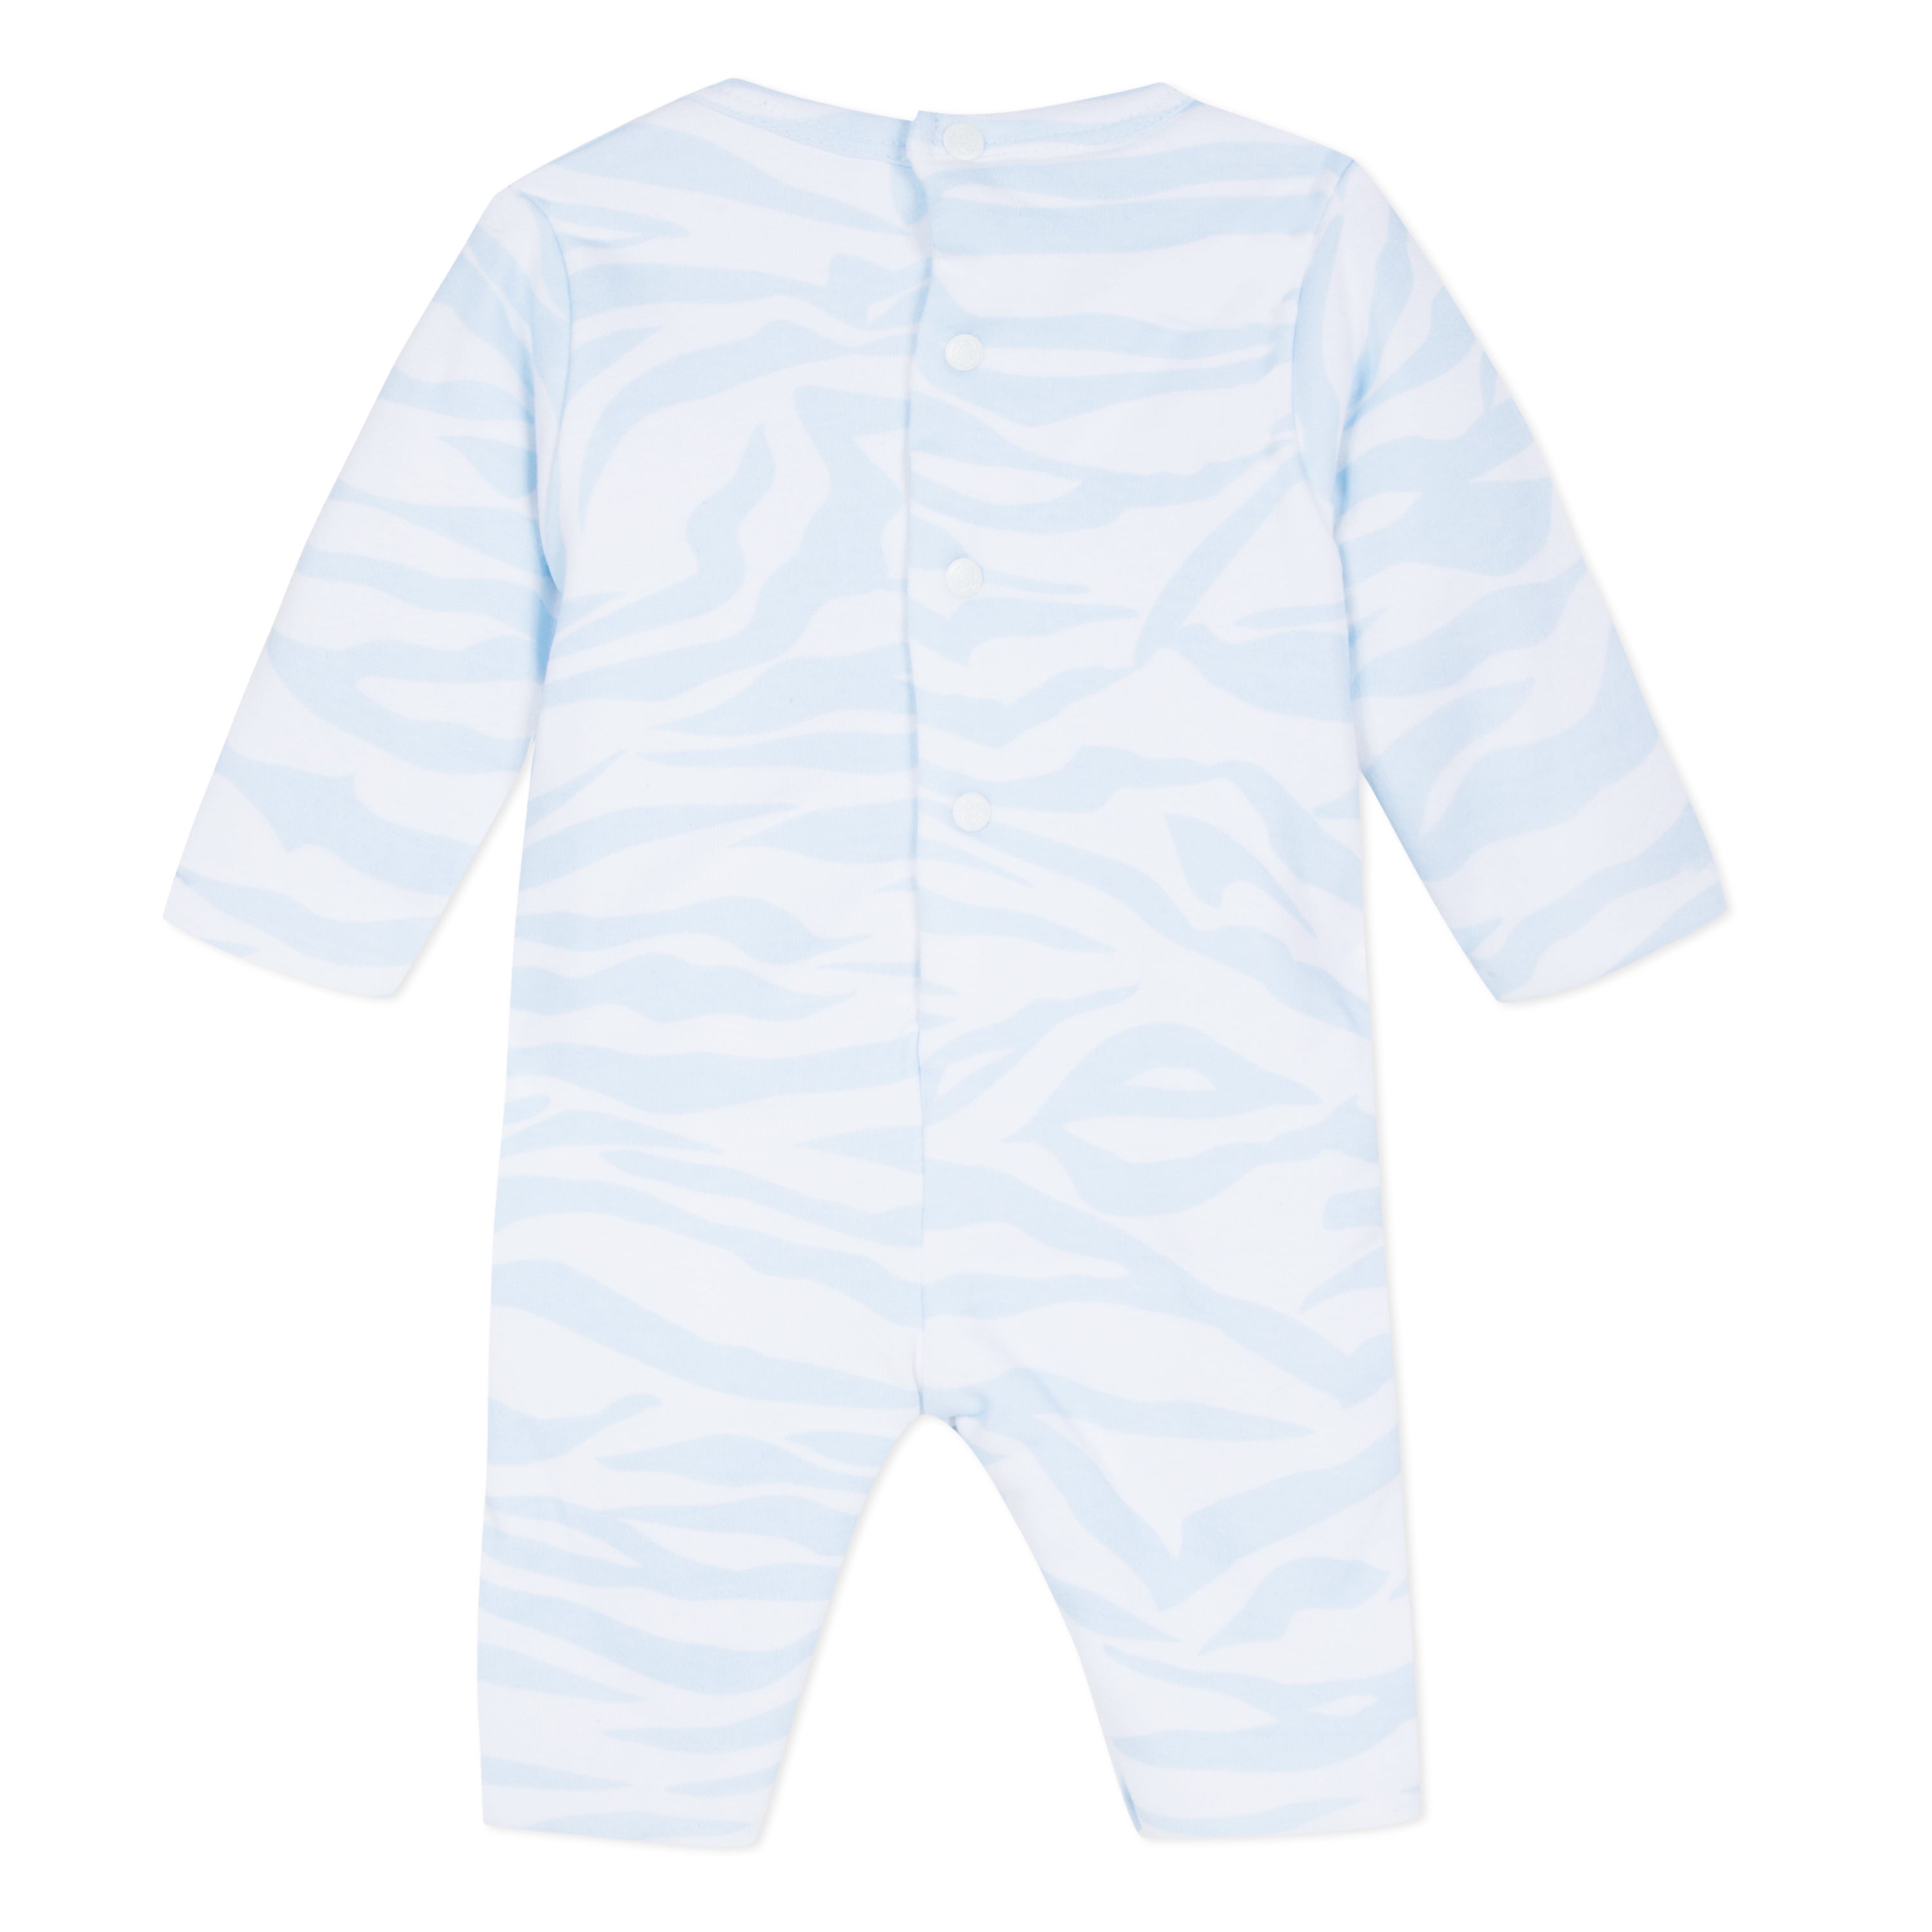 Baby Boys Light Blue Cotton Babysuit Gift Set